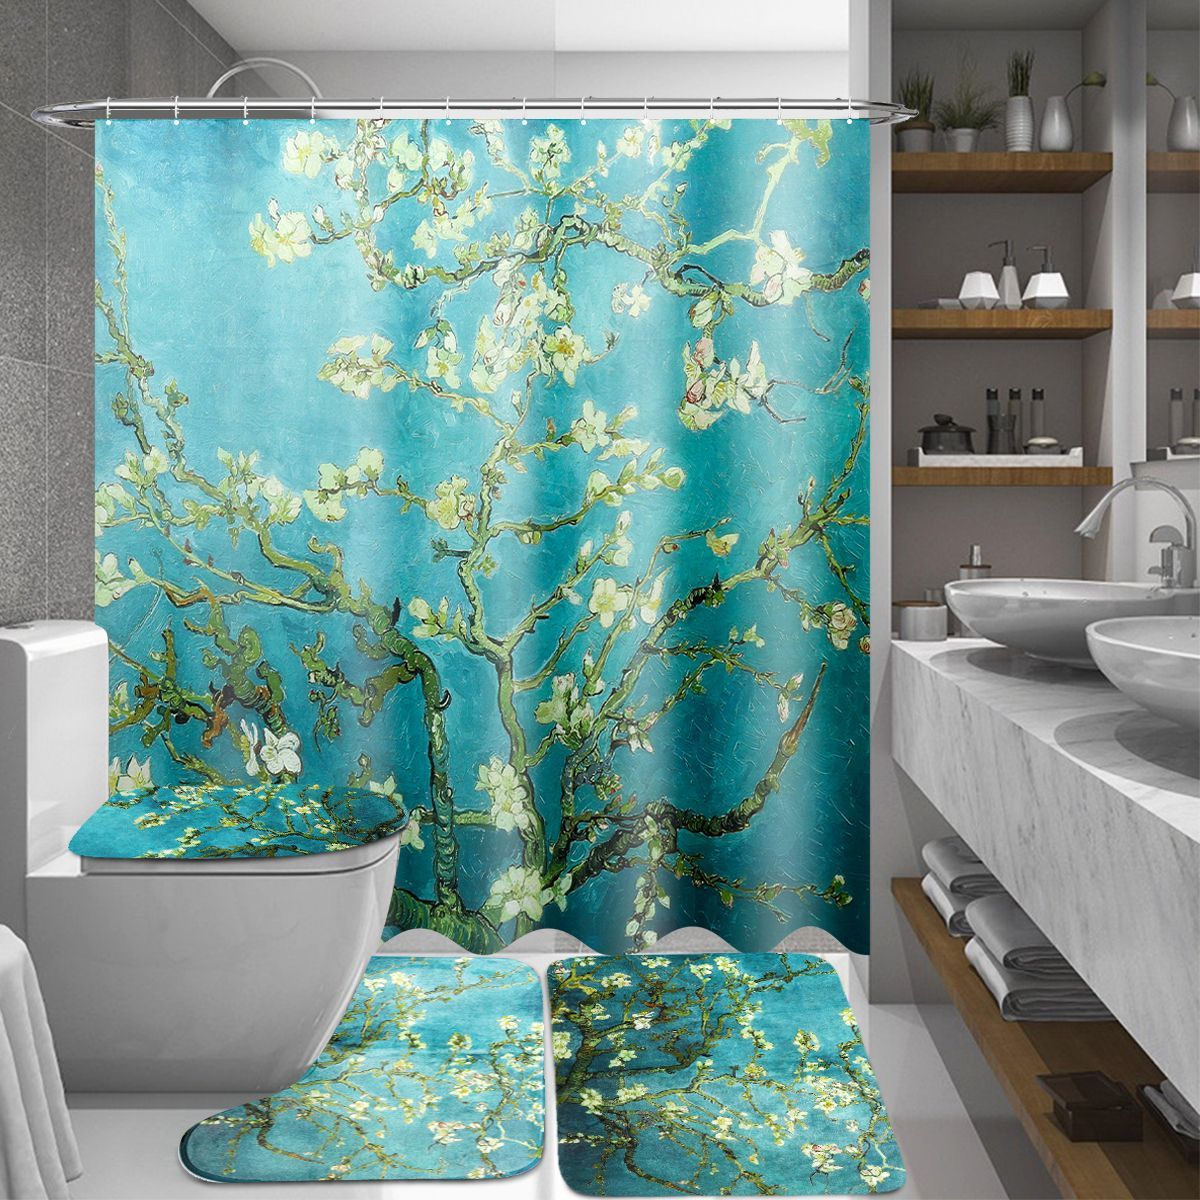 Flower-Waterproof-Shower-Curtain-Waterproof-Polyester-Fabric-Bathroom-Curtains-for-12-Hooks-1552627